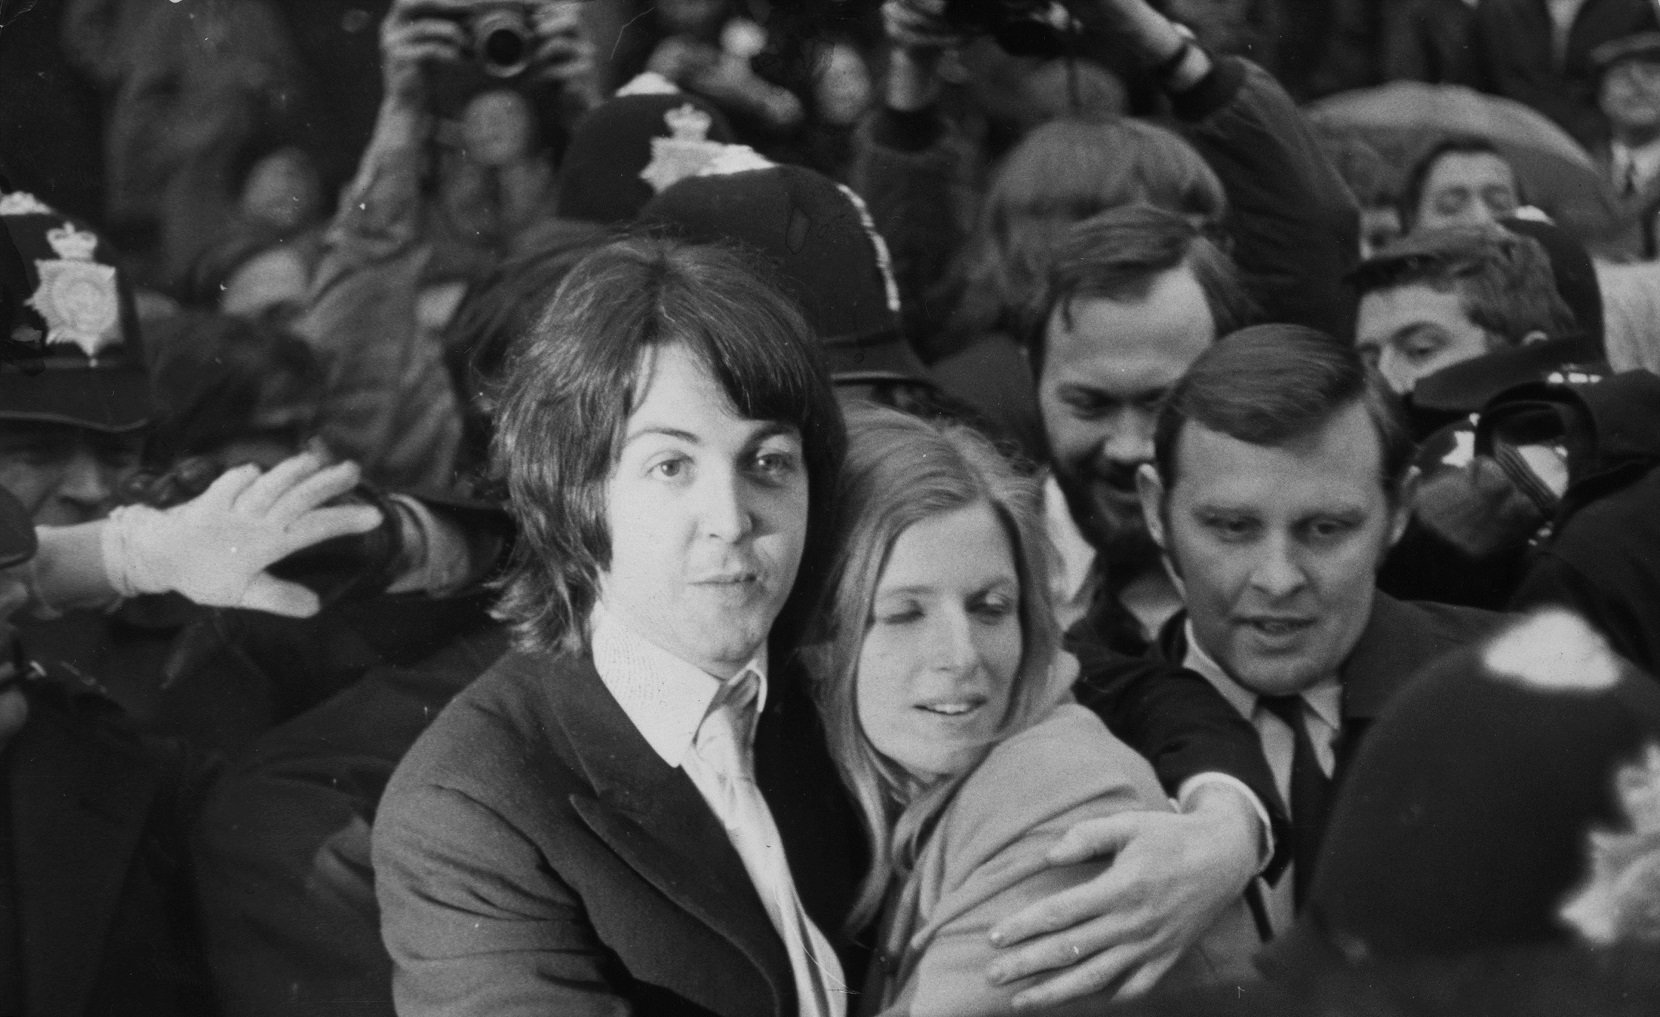 Paul McCartney marries Linda